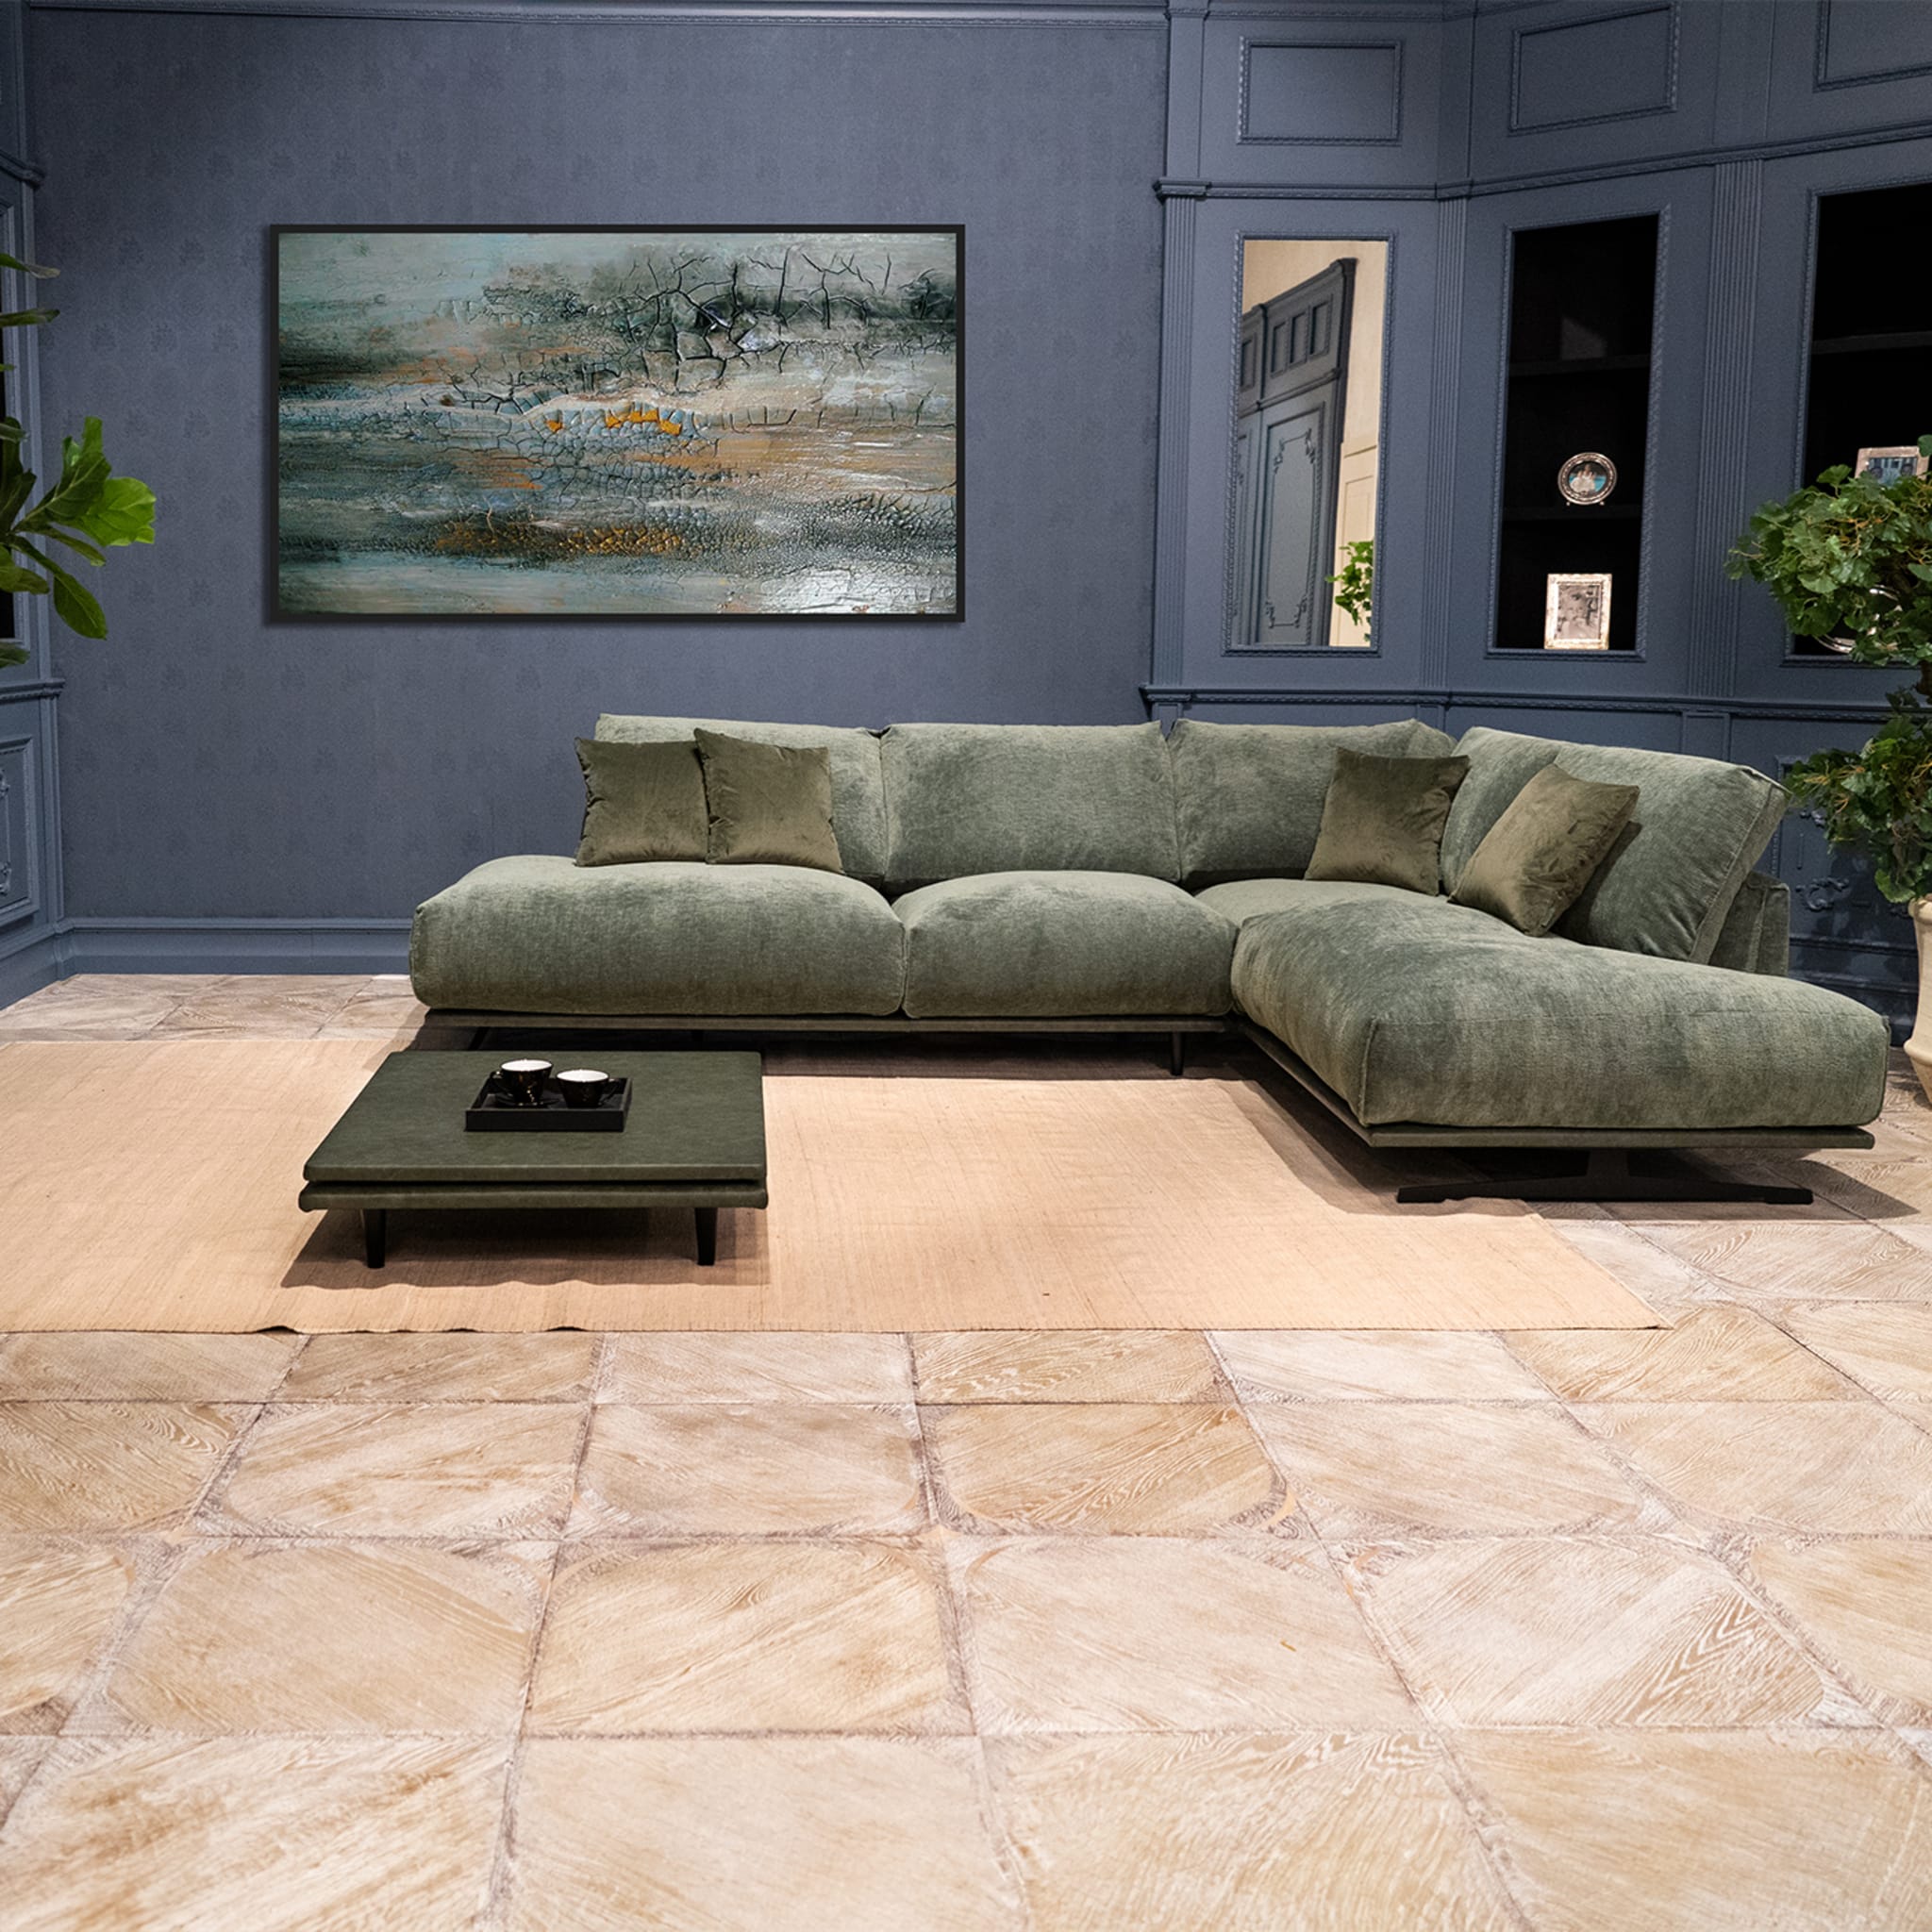  Boboli Green Corner Sofa with Side Table - Alternative view 5